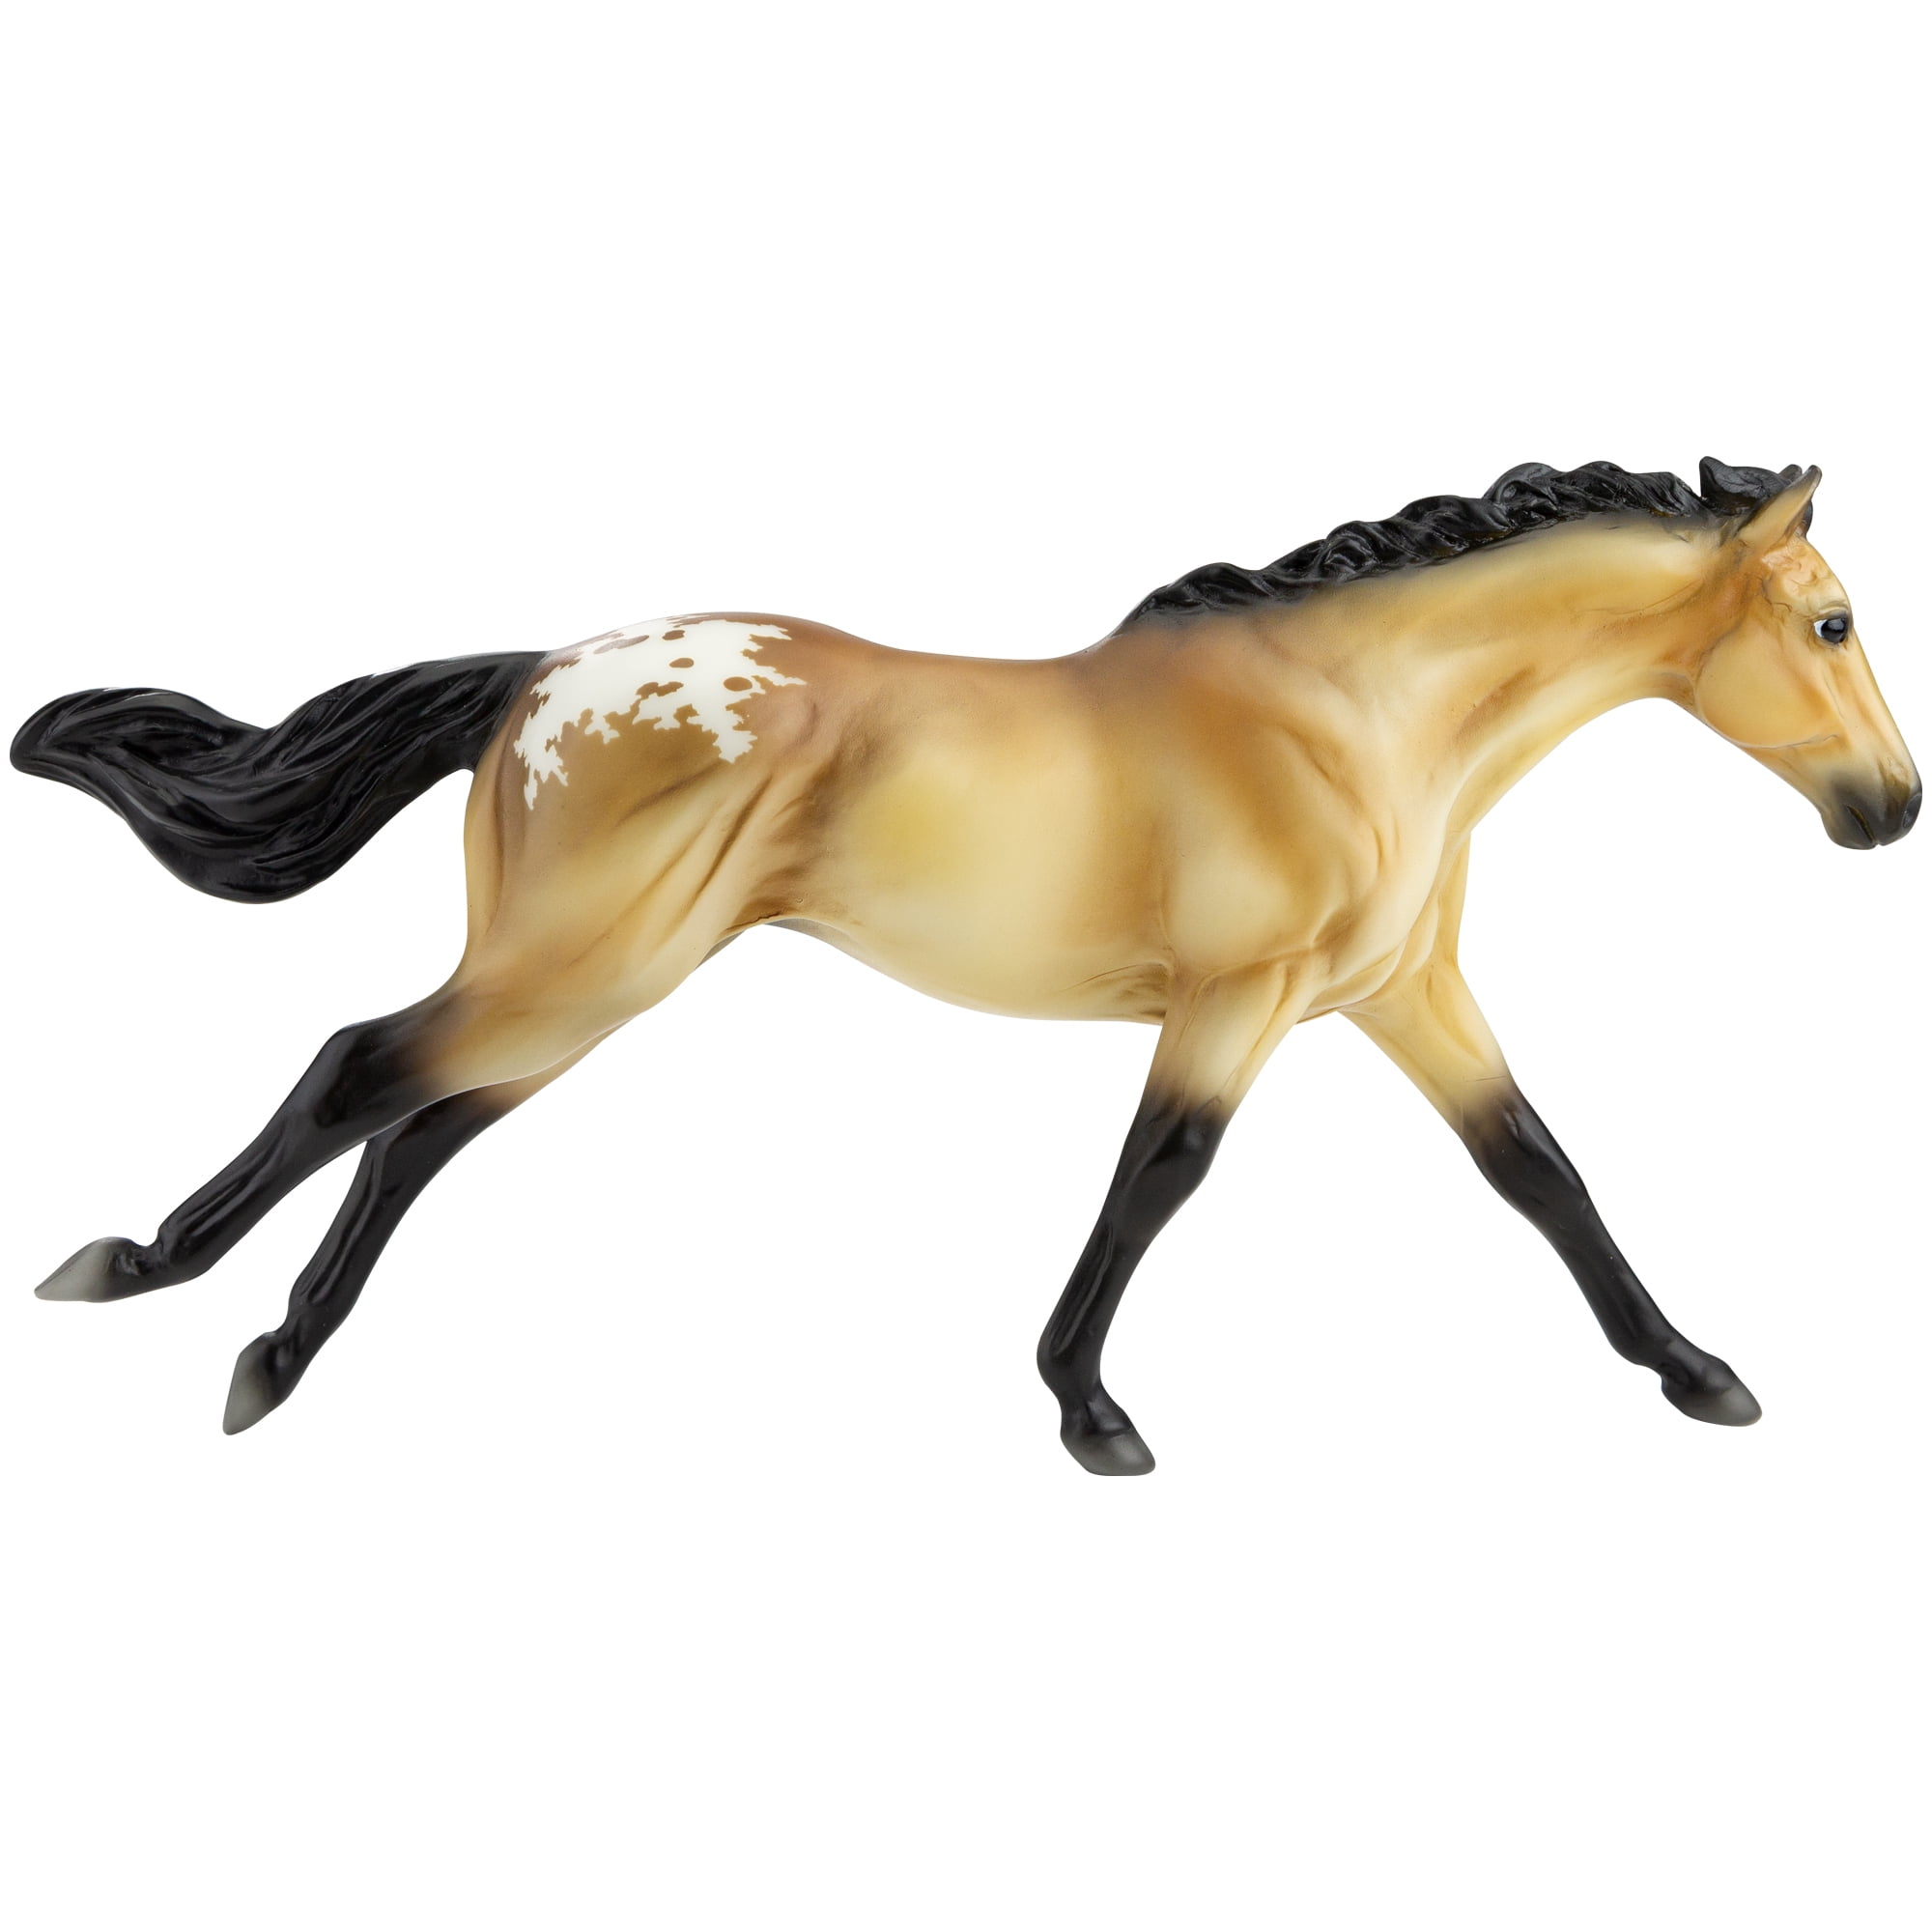 Breyer 1435 Lil' Ricky Rocker Appaloosa Champion Horse Traditional Series 1 9 for sale online